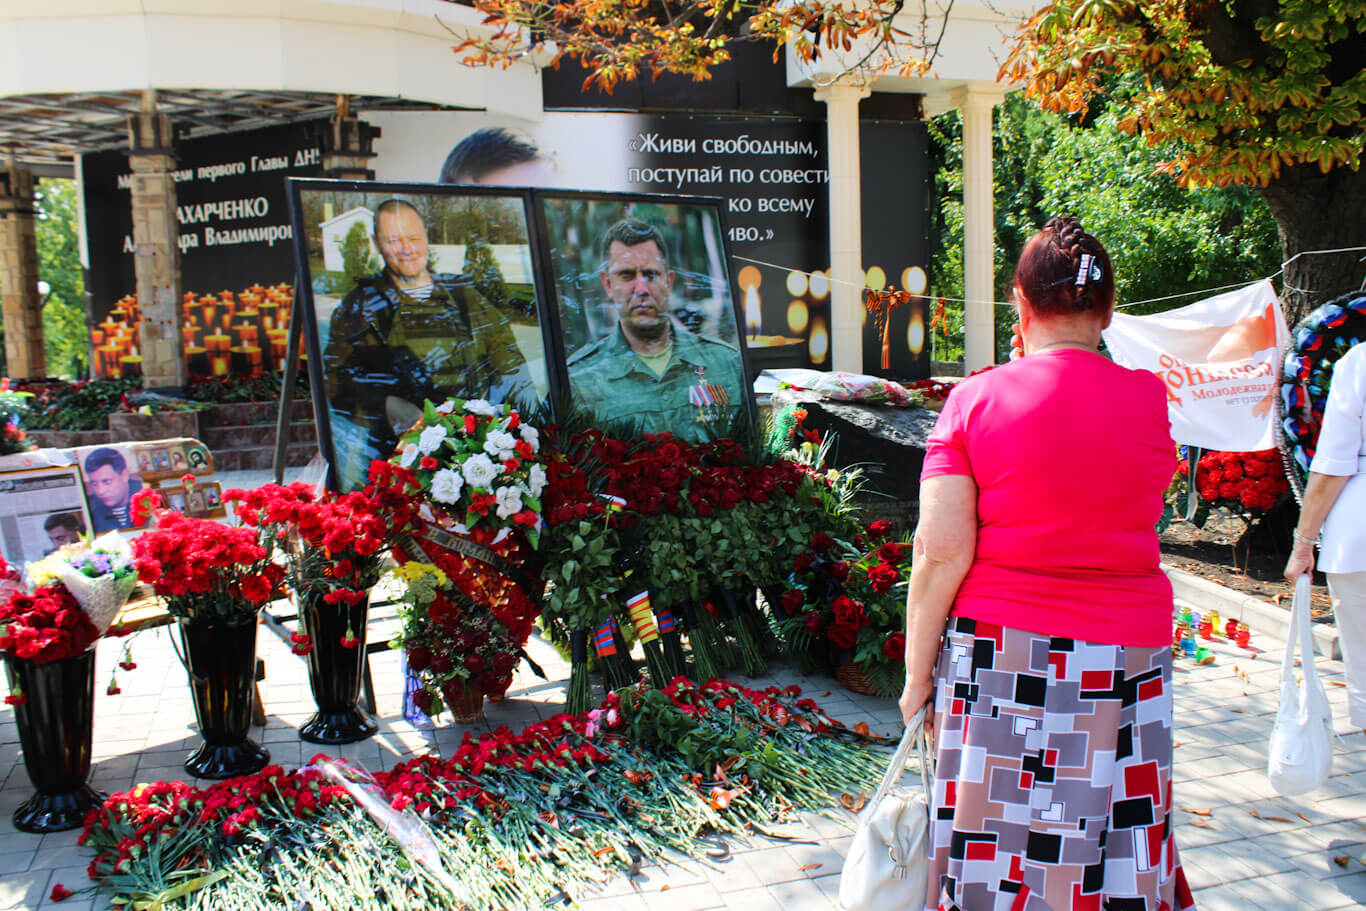 Donbass War Diary memorial 